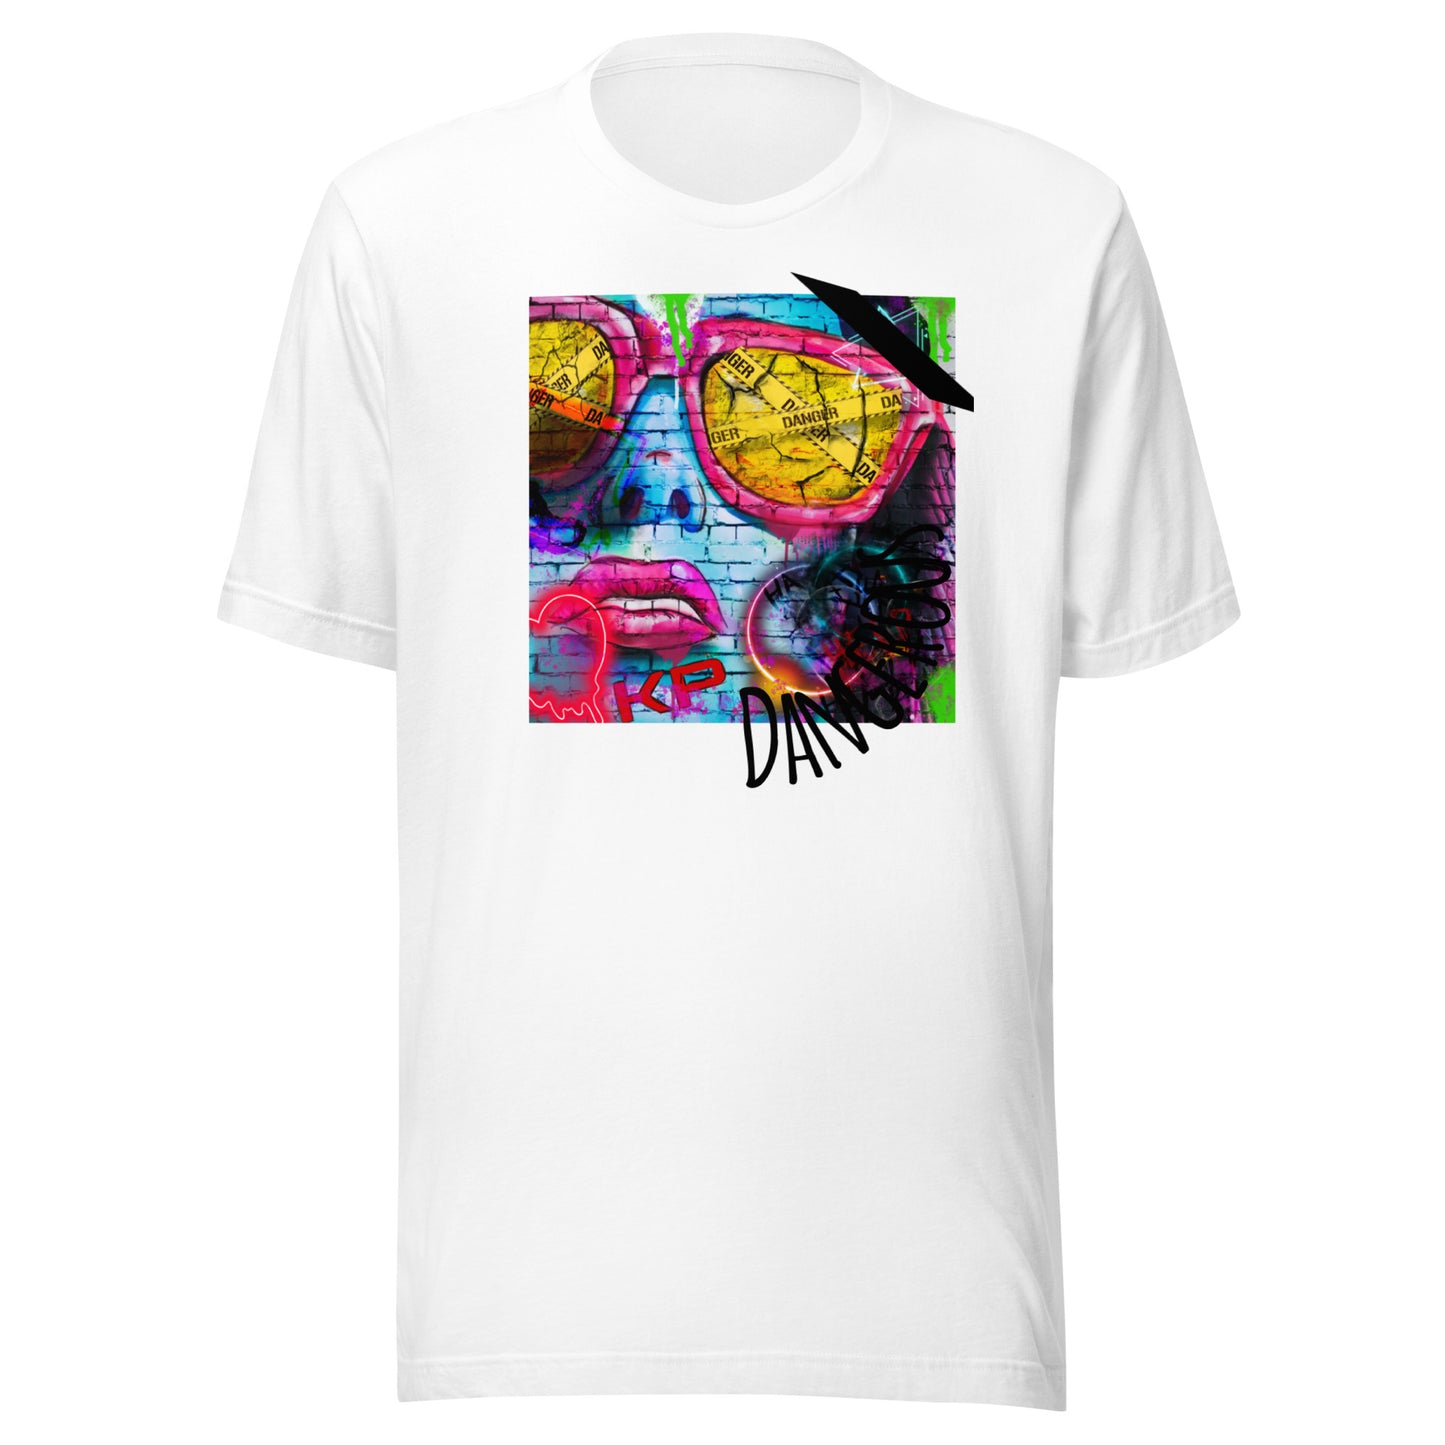 Graphic Short-sleeve unisex t-shirt “Dangerous”